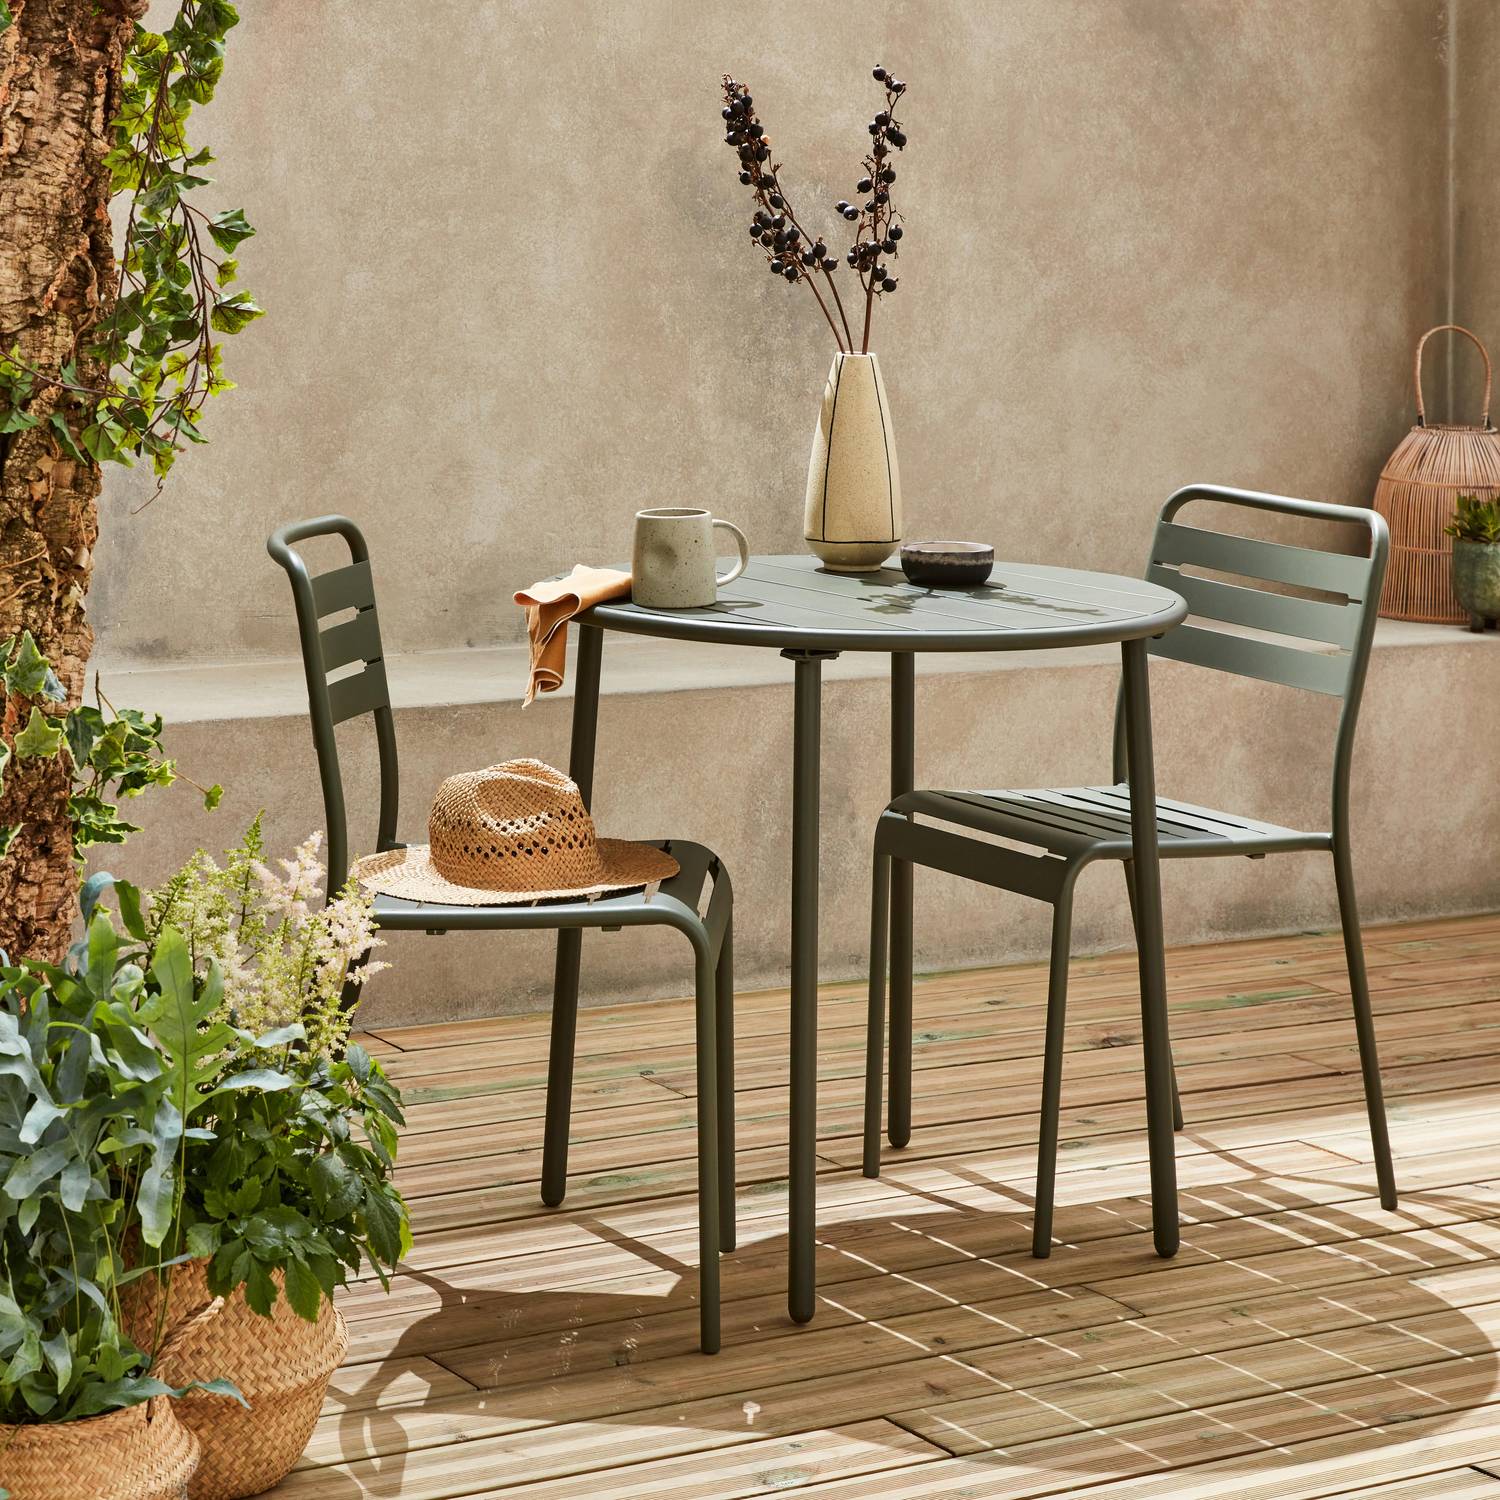 Amélia savane metalen tuintafel met 2 stoelen, roestbestendige afwerking Photo2